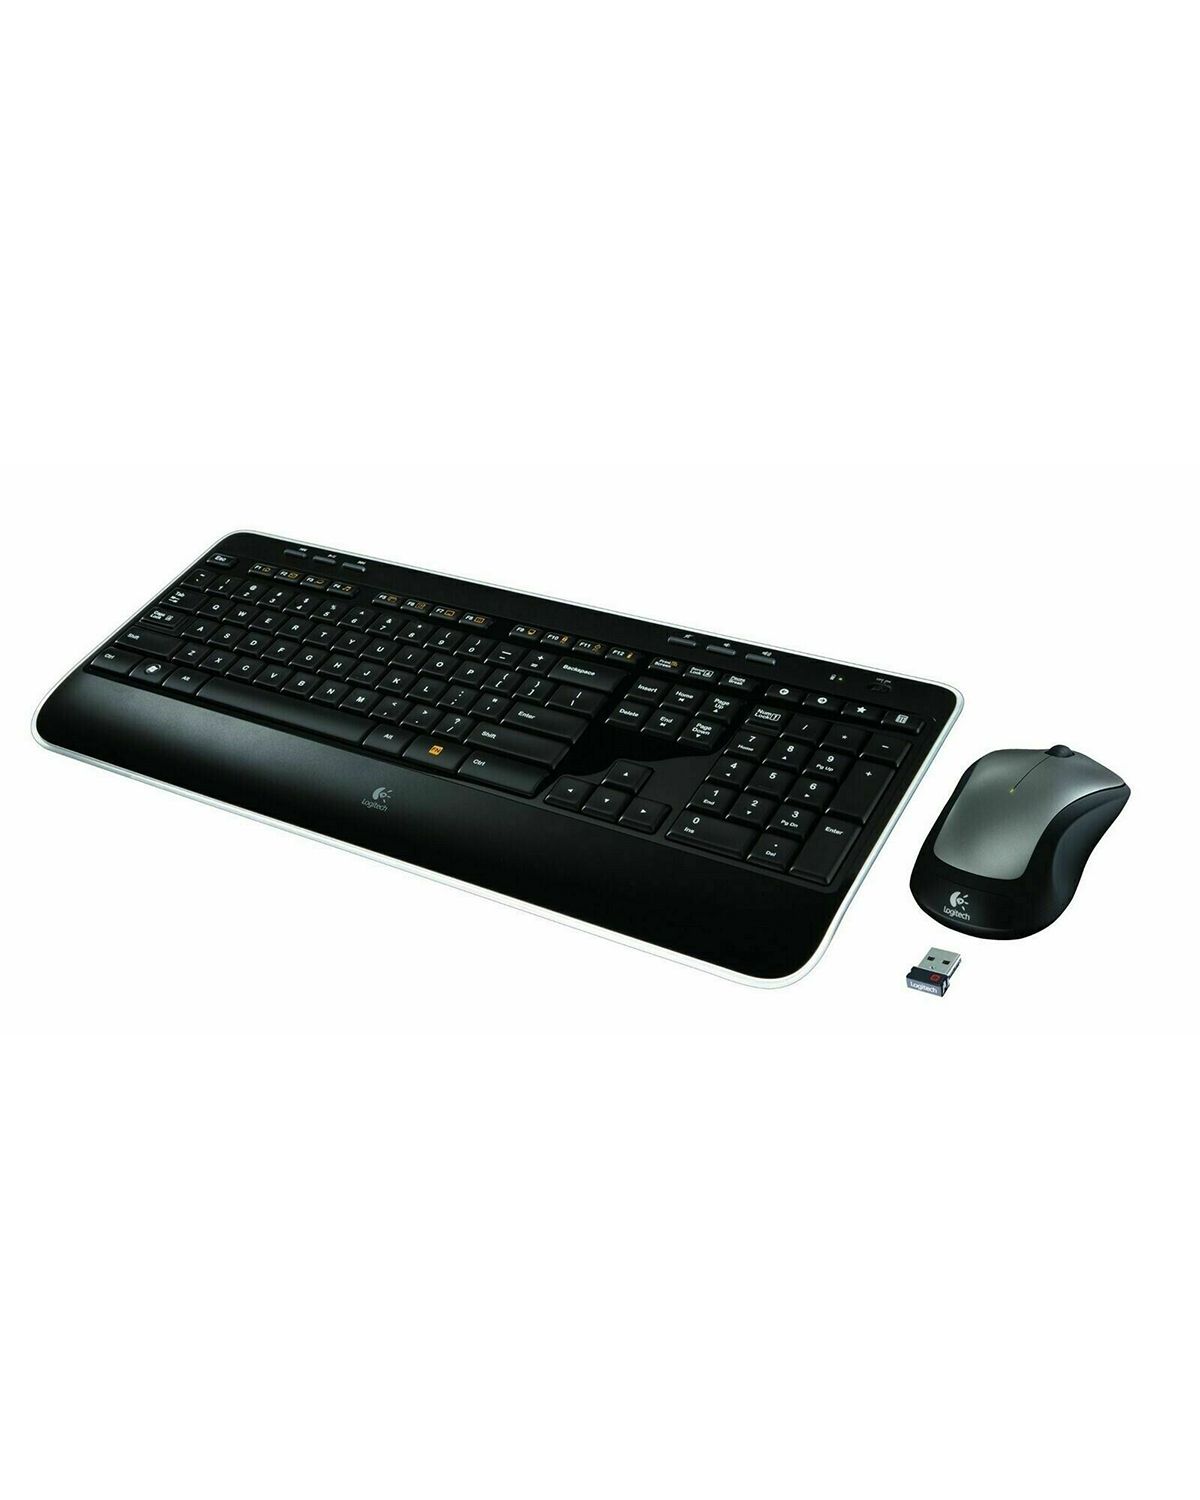 Shop - Logitech Wireless Desktop MK520 Keyboard And Mouse CoMBo -